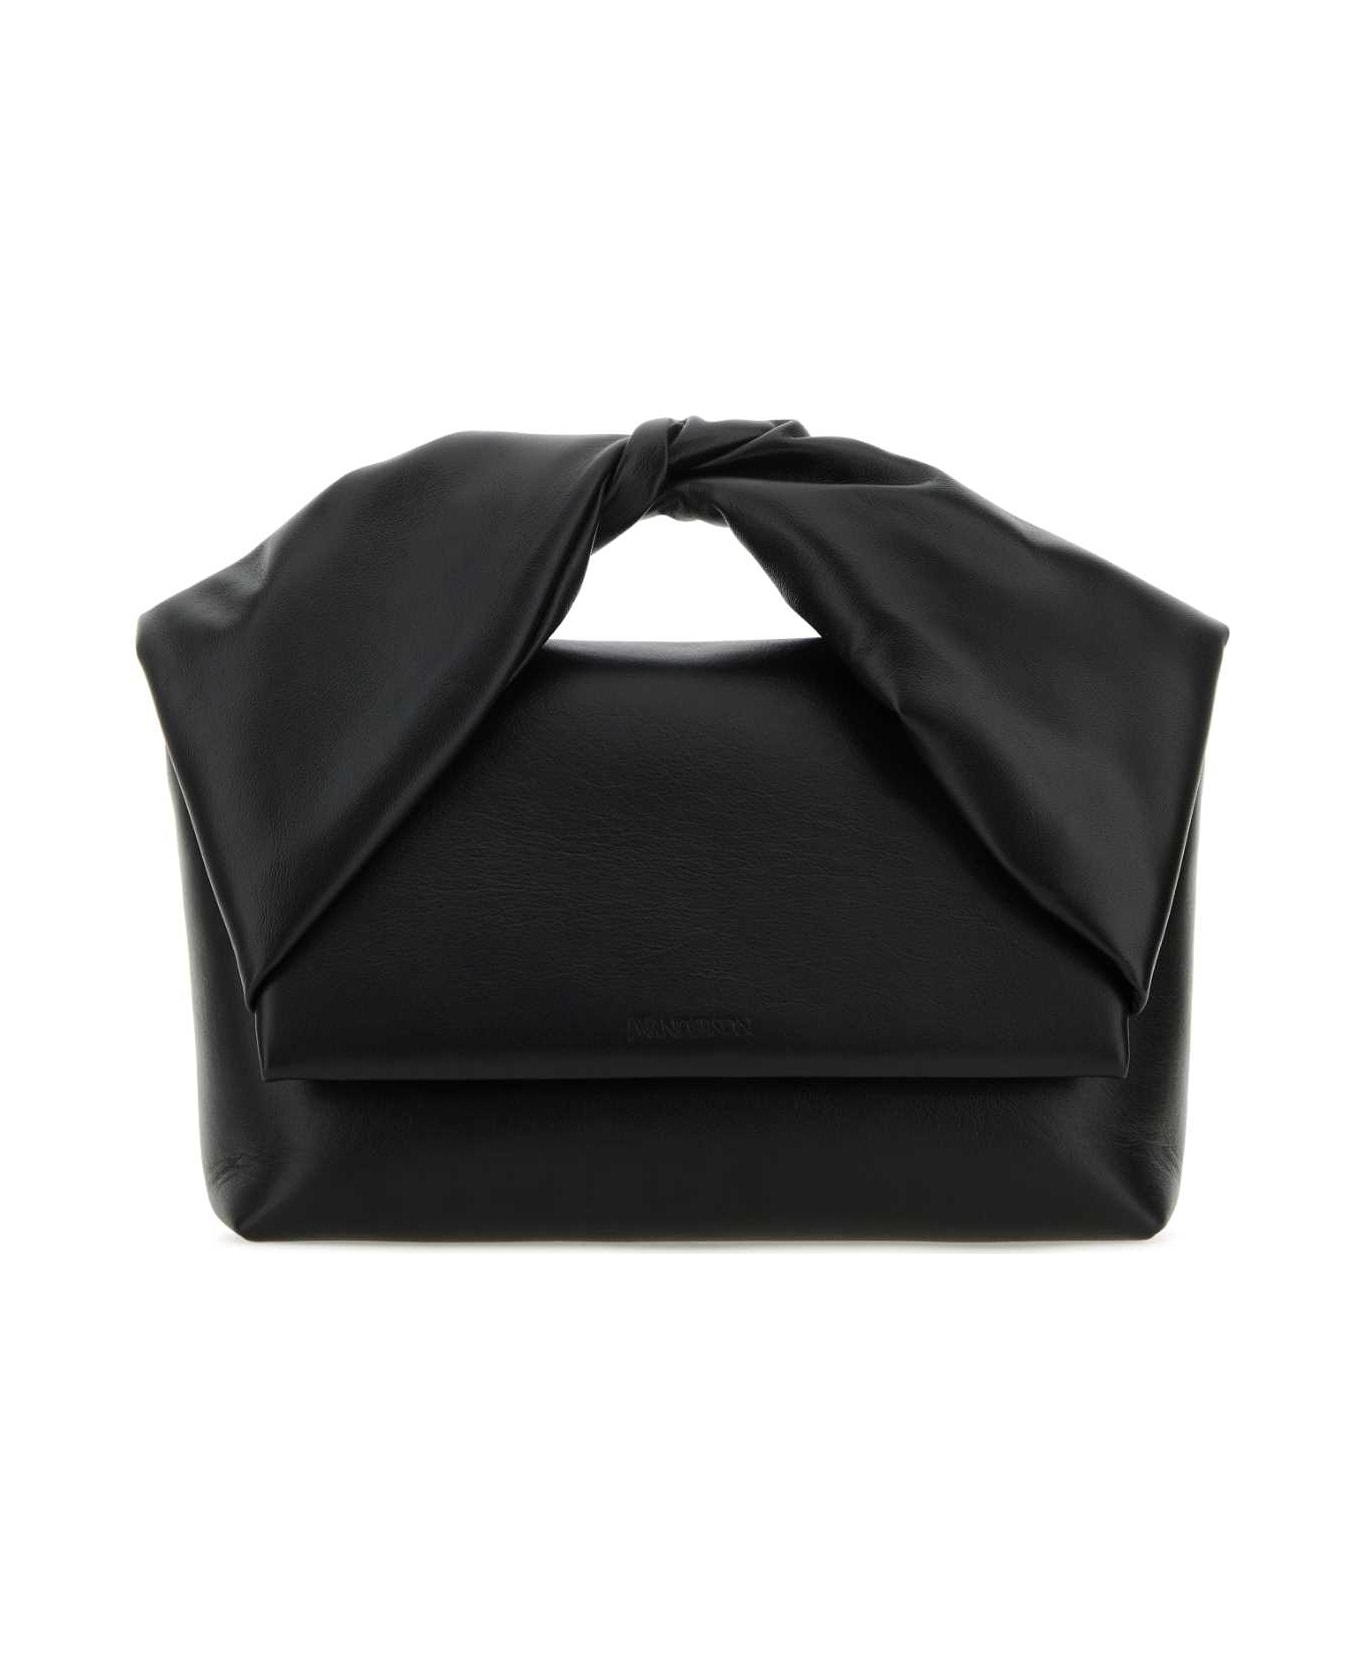 J.W. Anderson Black Nappa Leather Twister Handbag - Black